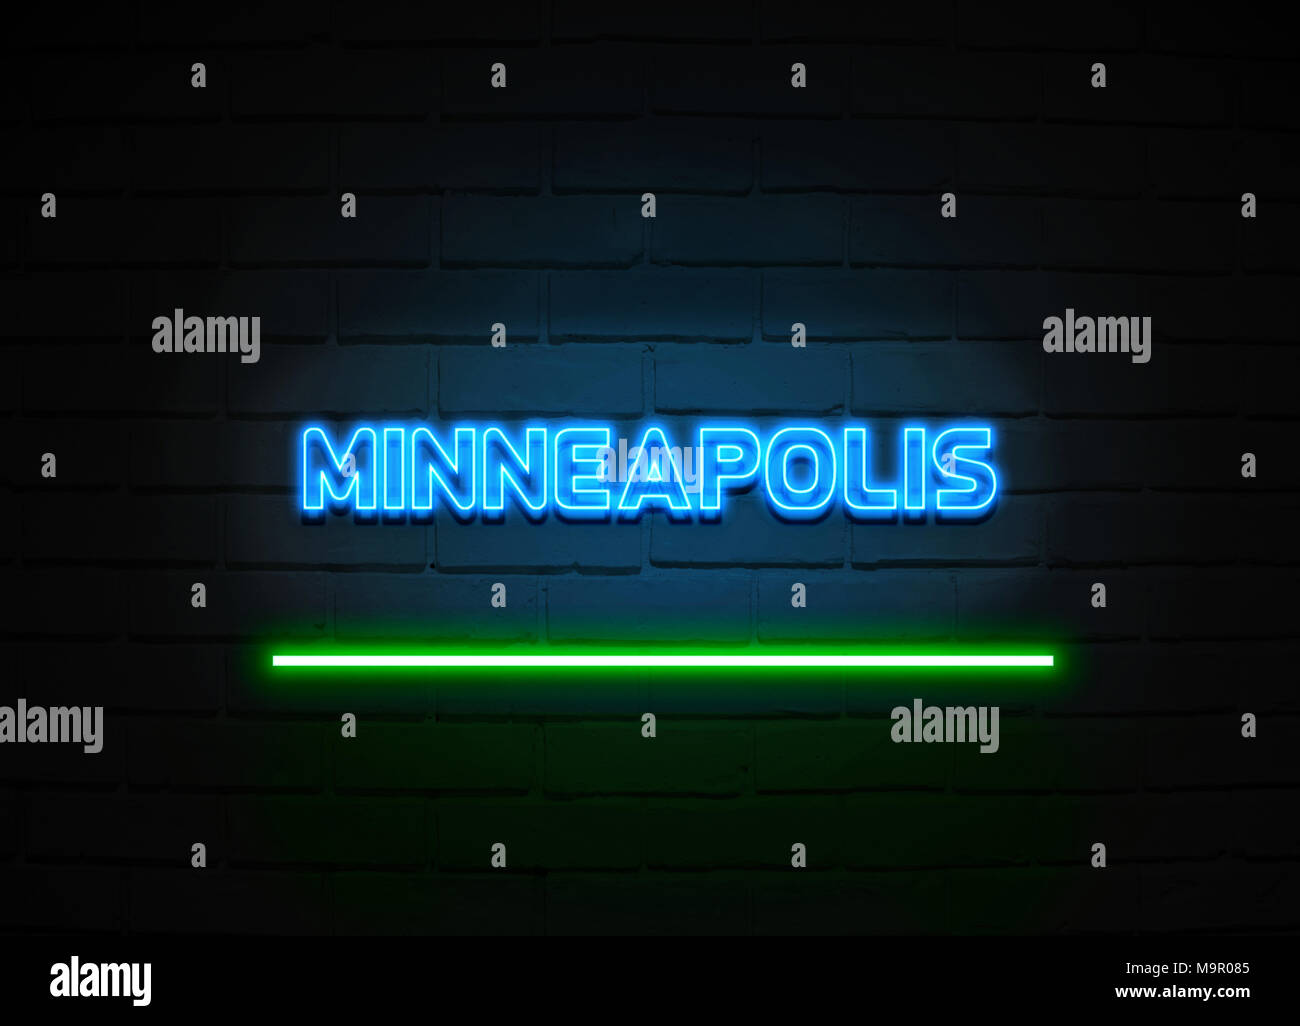 Minneapolis Leuchtreklame - glühende Leuchtreklame auf brickwall Wand - 3D-Royalty Free Stock Illustration dargestellt. Stockfoto